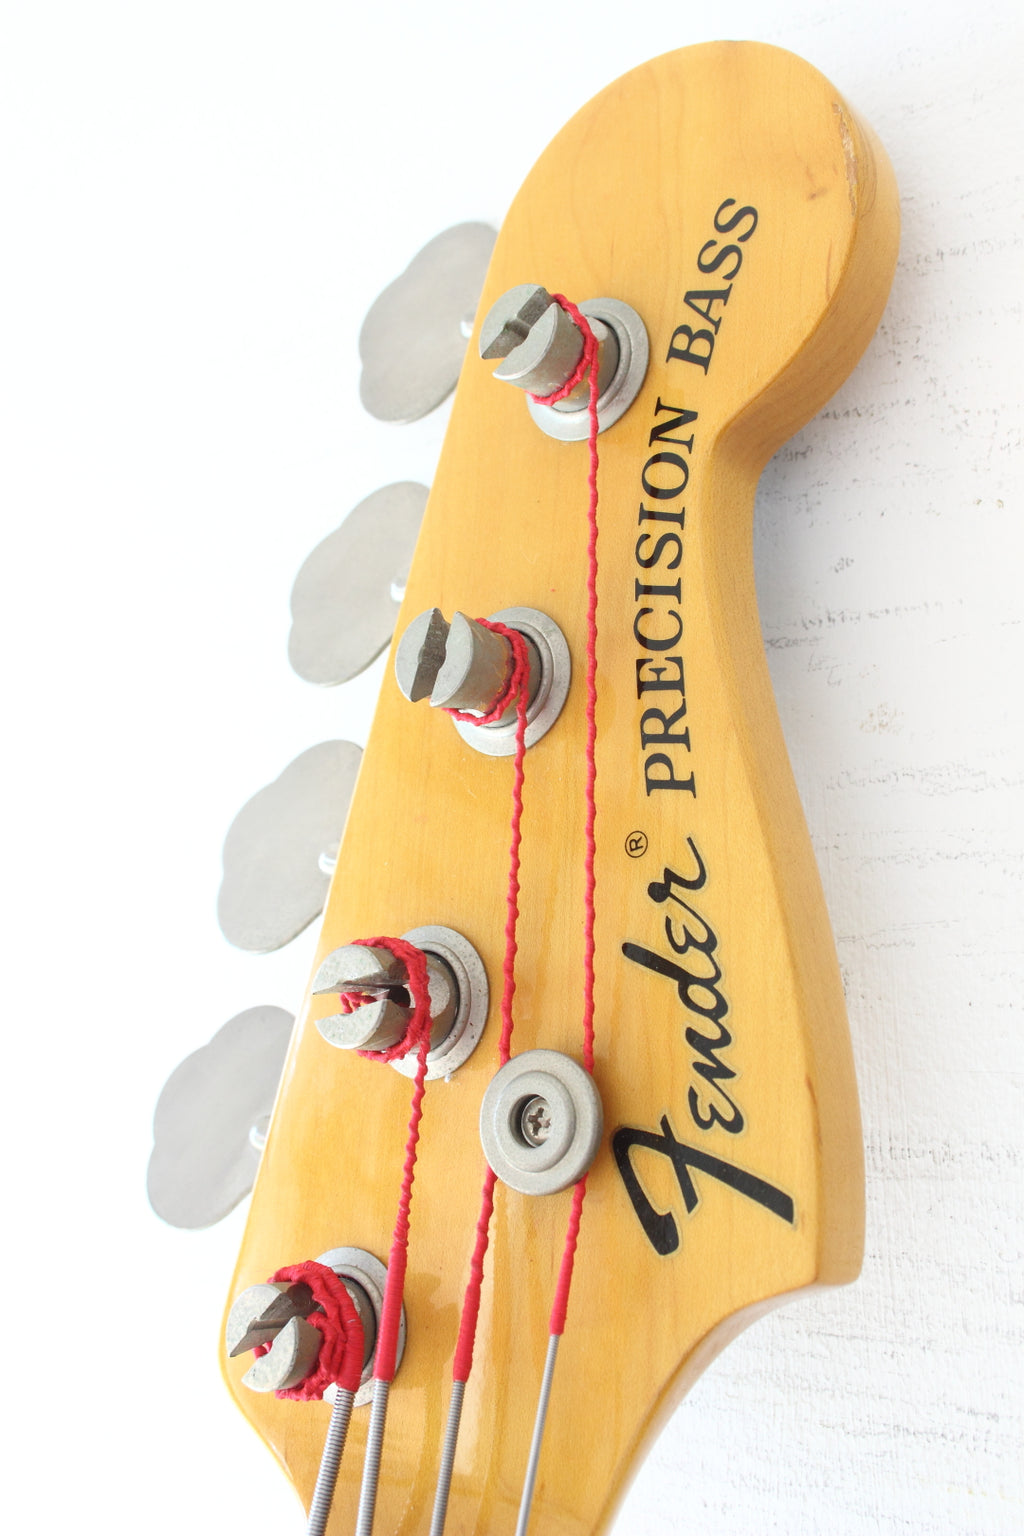 Fender Japan '70 Reissue Precision Bass PB70-70US Aged Sonic Blue 1997-00